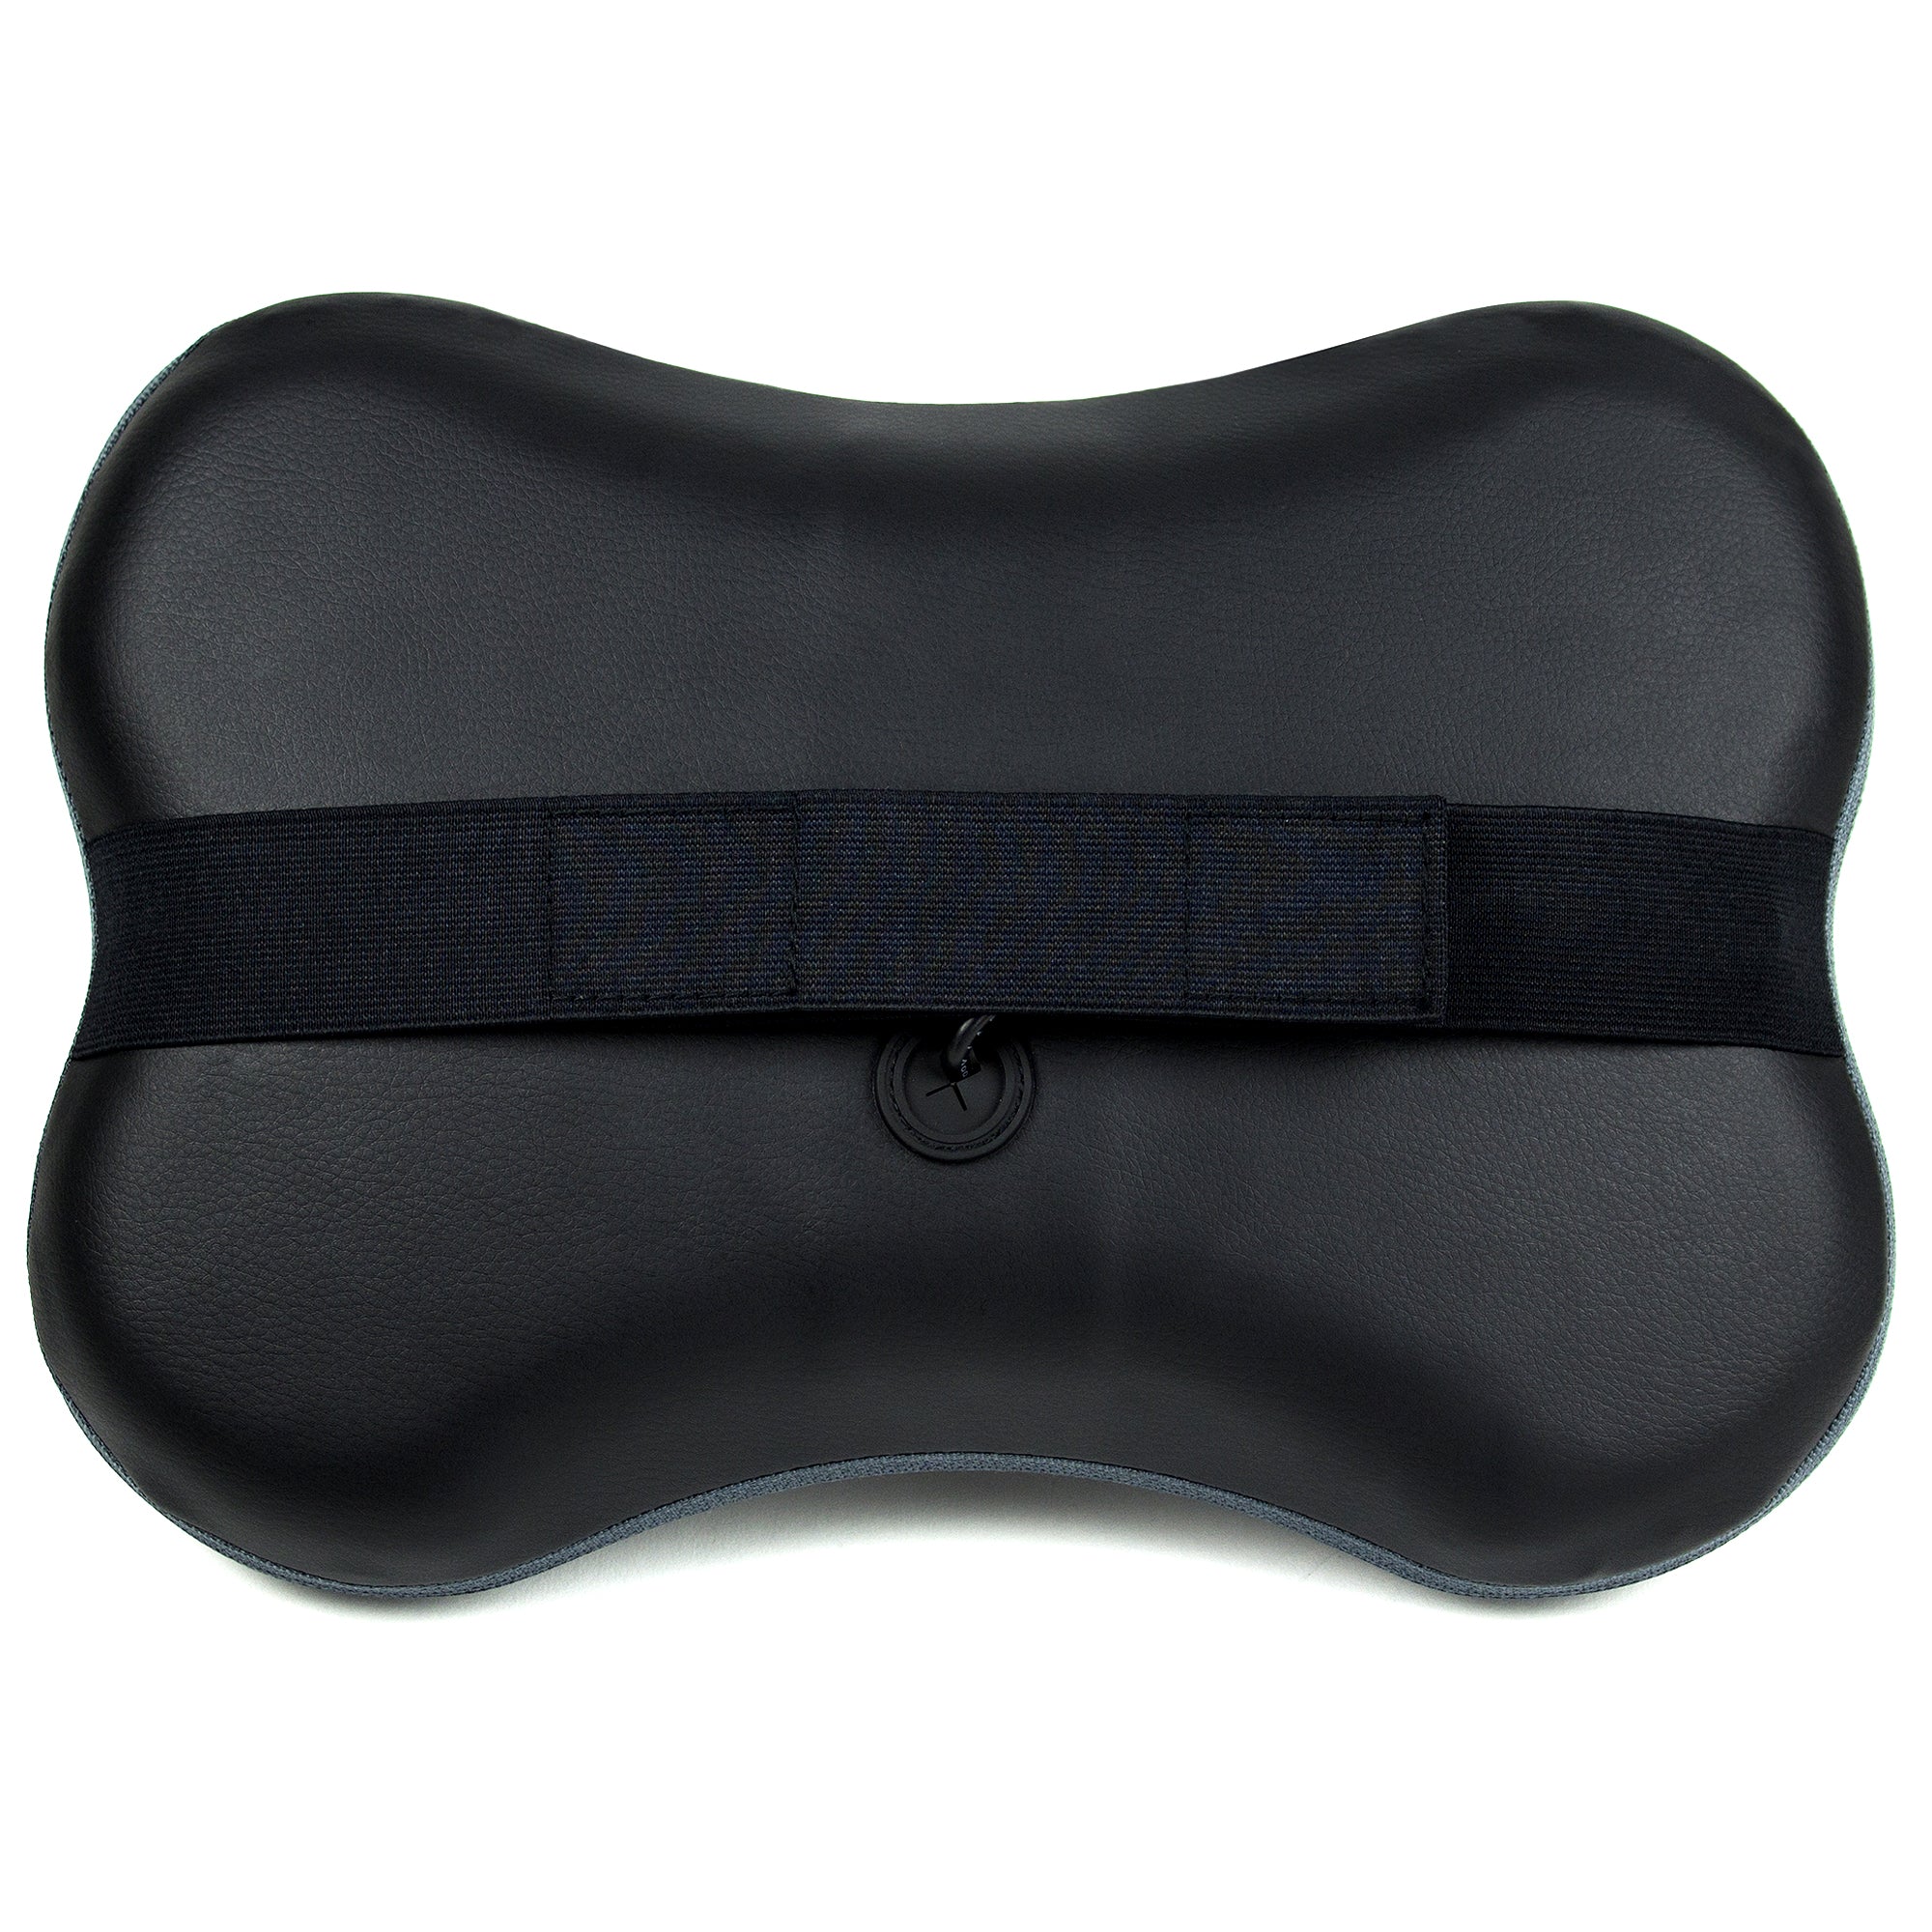 Zyllion Shiatsu Neck & Back Seat Cushion Massager with Soothing Heat  Function & 3 Massage Styles, Rolling, Spot, and Kneading (Black), Model  ZMA14, 1 Year Warranty 